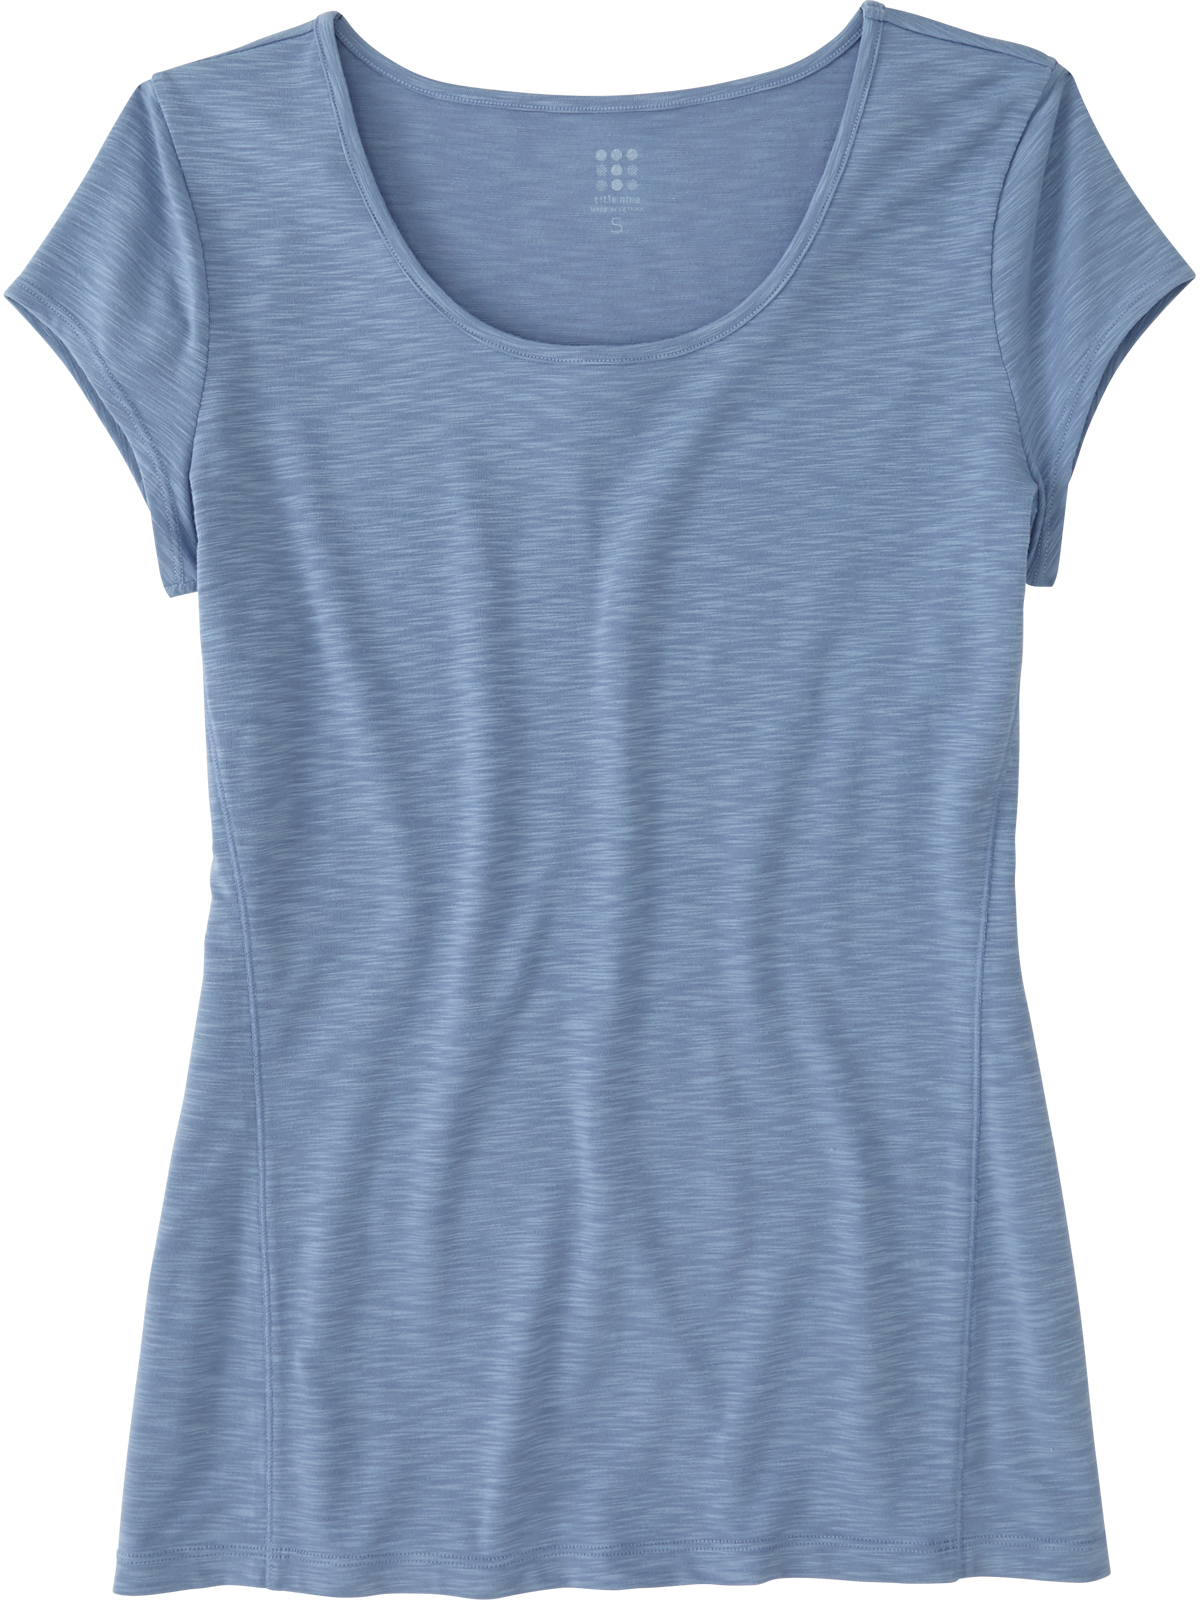 9-H15 STCL Womens Cotton Short Sleeve Toile Hem High-Low Top Shirt